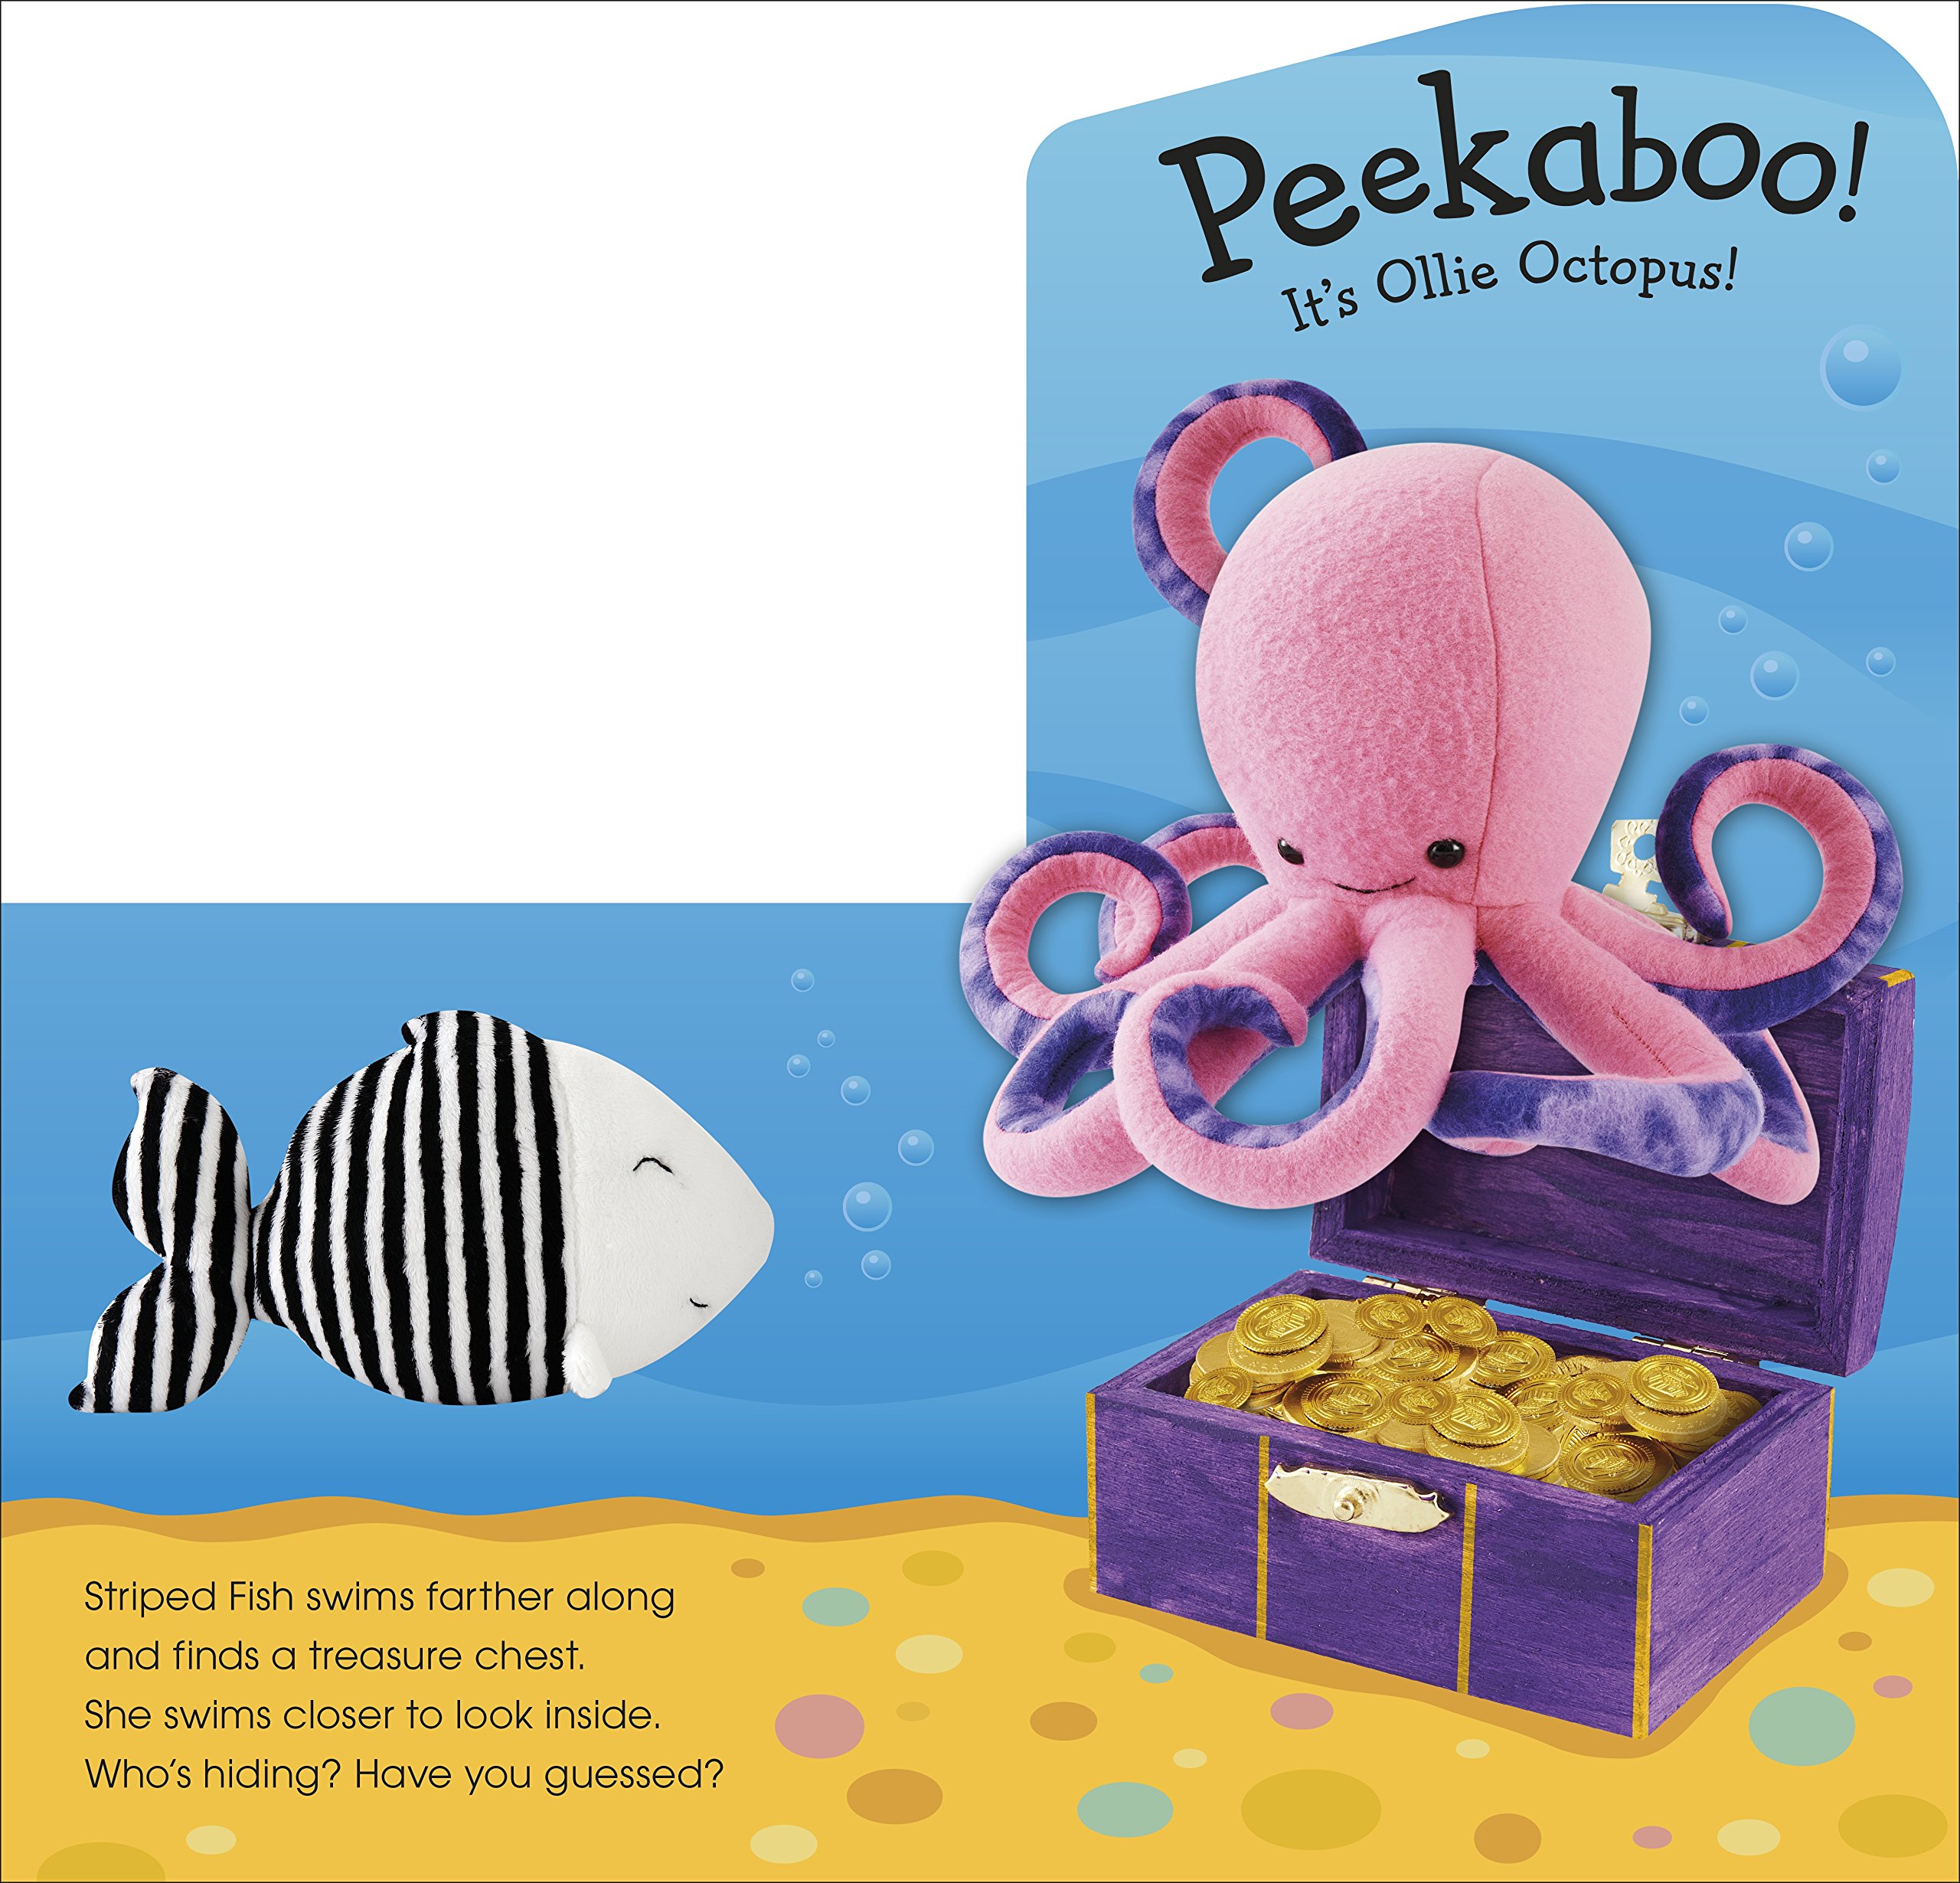 Pop-up Peekaboo: Under the Sea